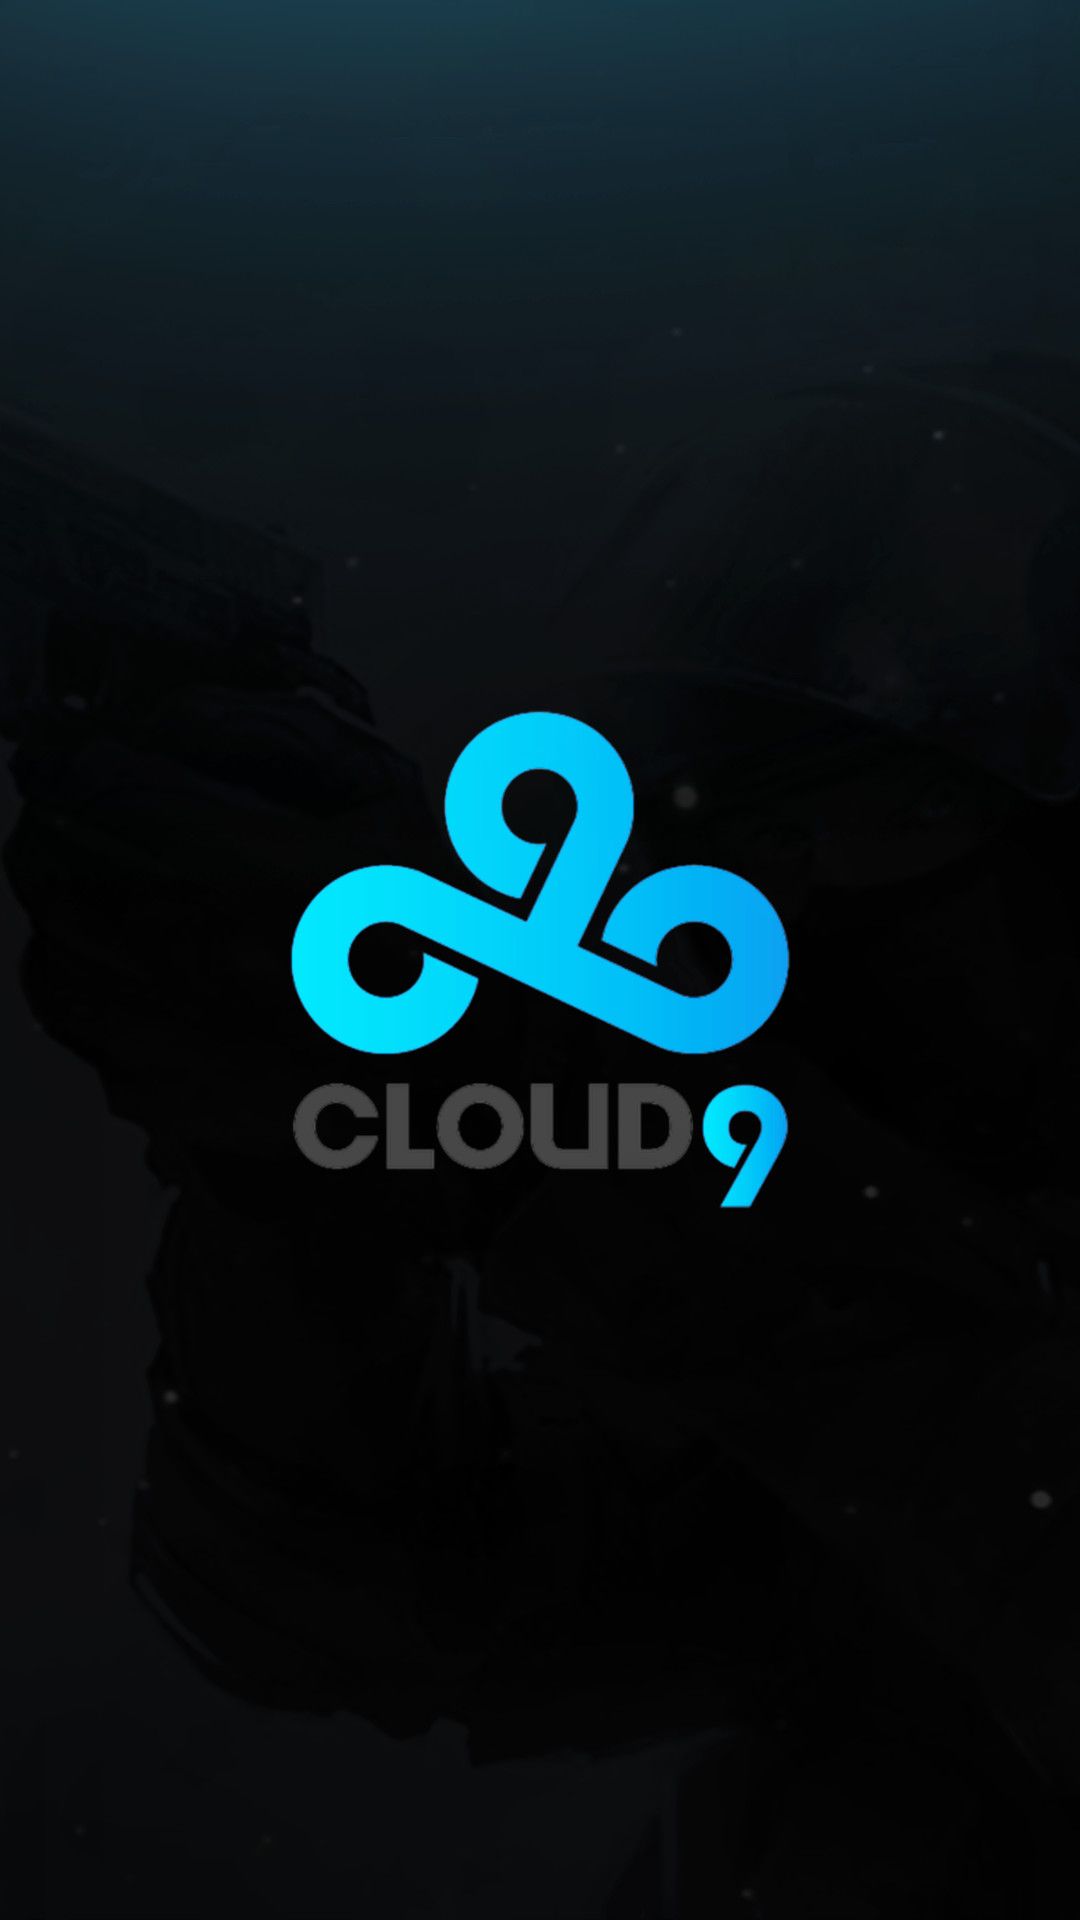 Ncloud. Cloud9 на аву. Клауд 9. Логотип cloud9. Лого Клауд 9.